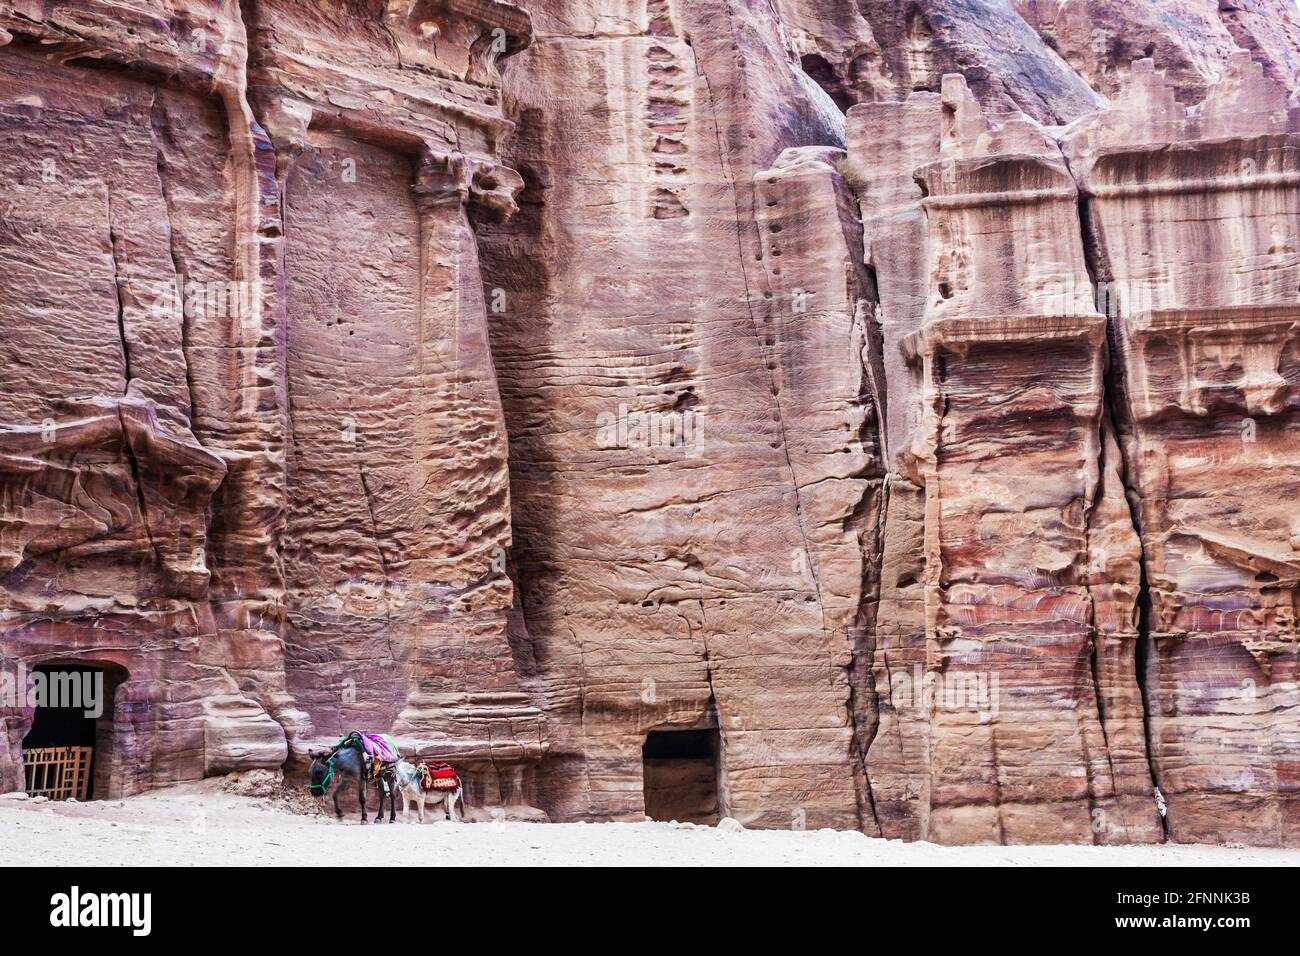 Part of the Street of Facades in Petra, Jordan. Stock Photo